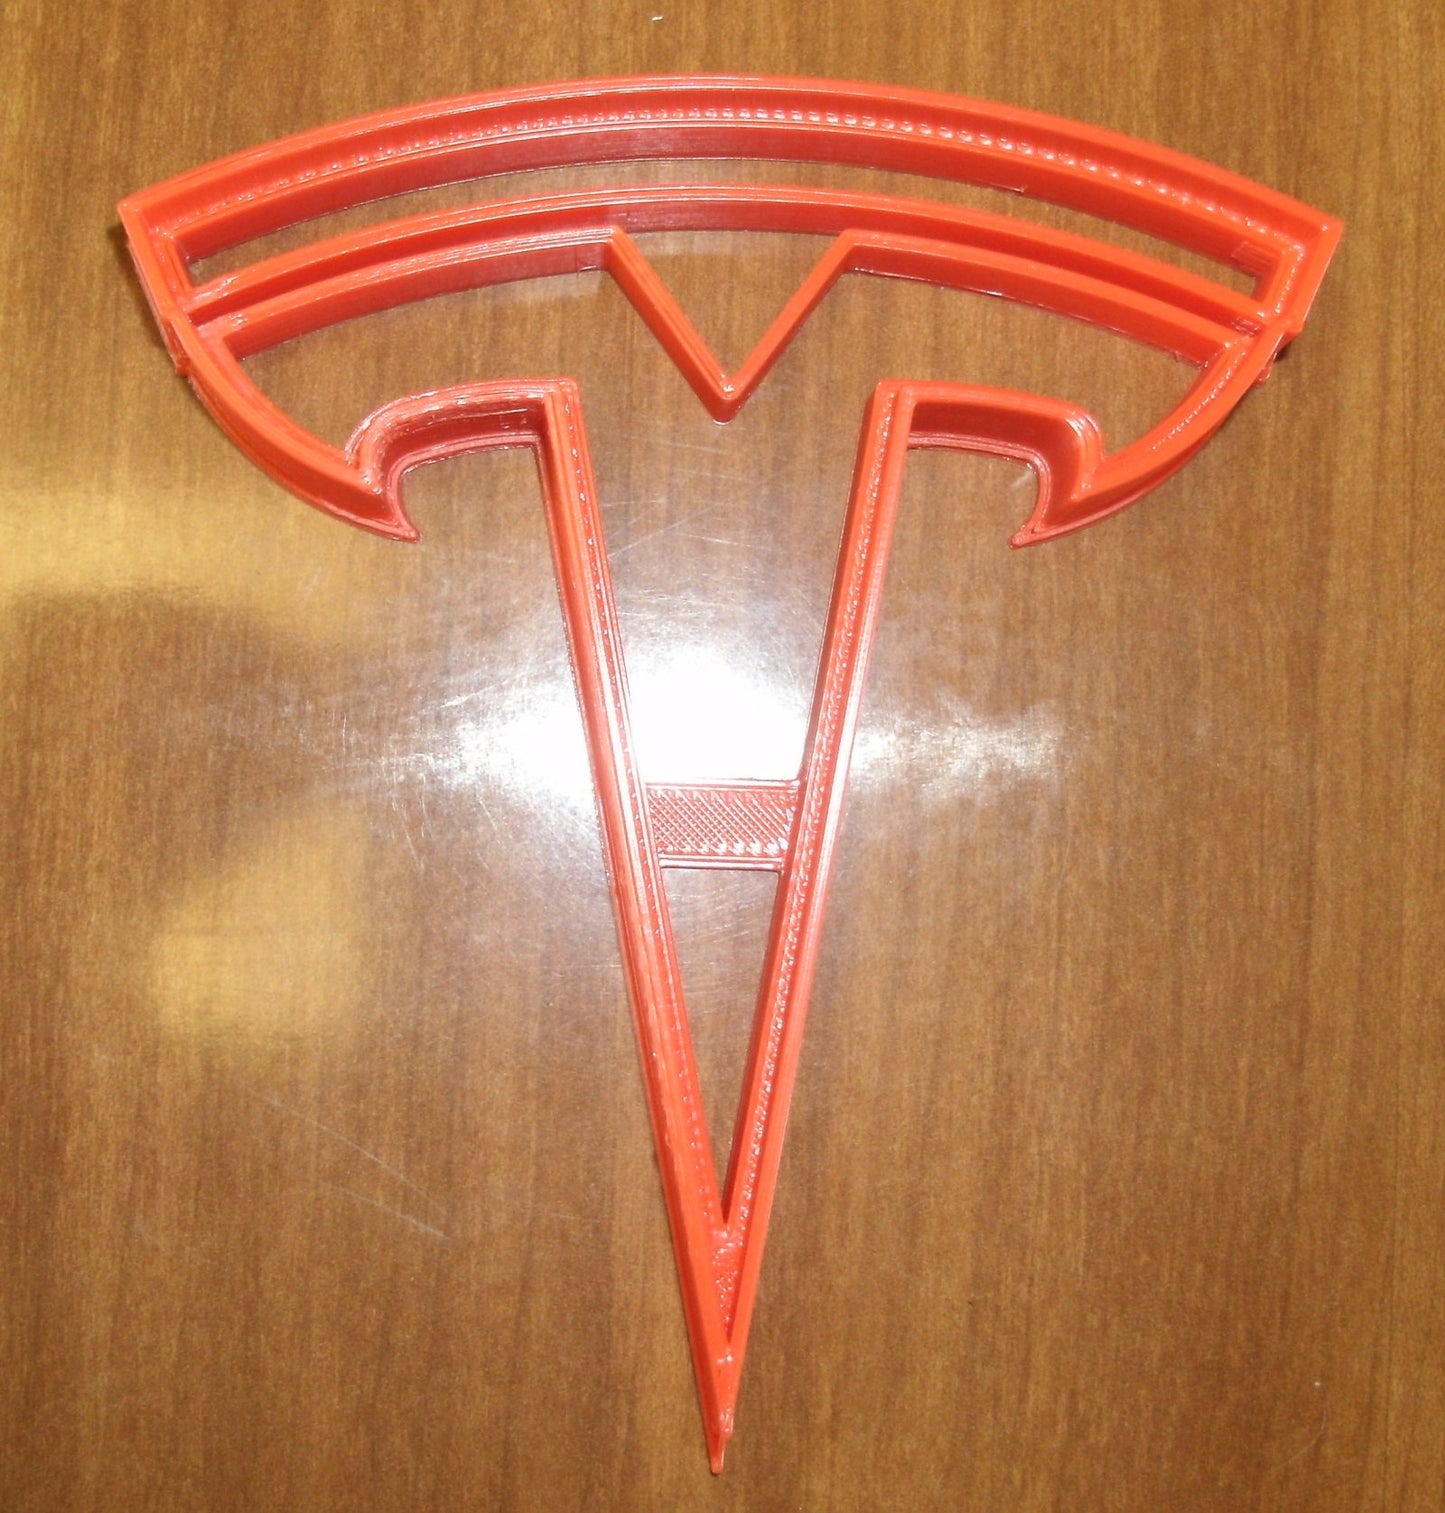 6x Tesla Symbol Car Fondant Cutter Cupcake Topper Size 1.75 Inch USA FD483